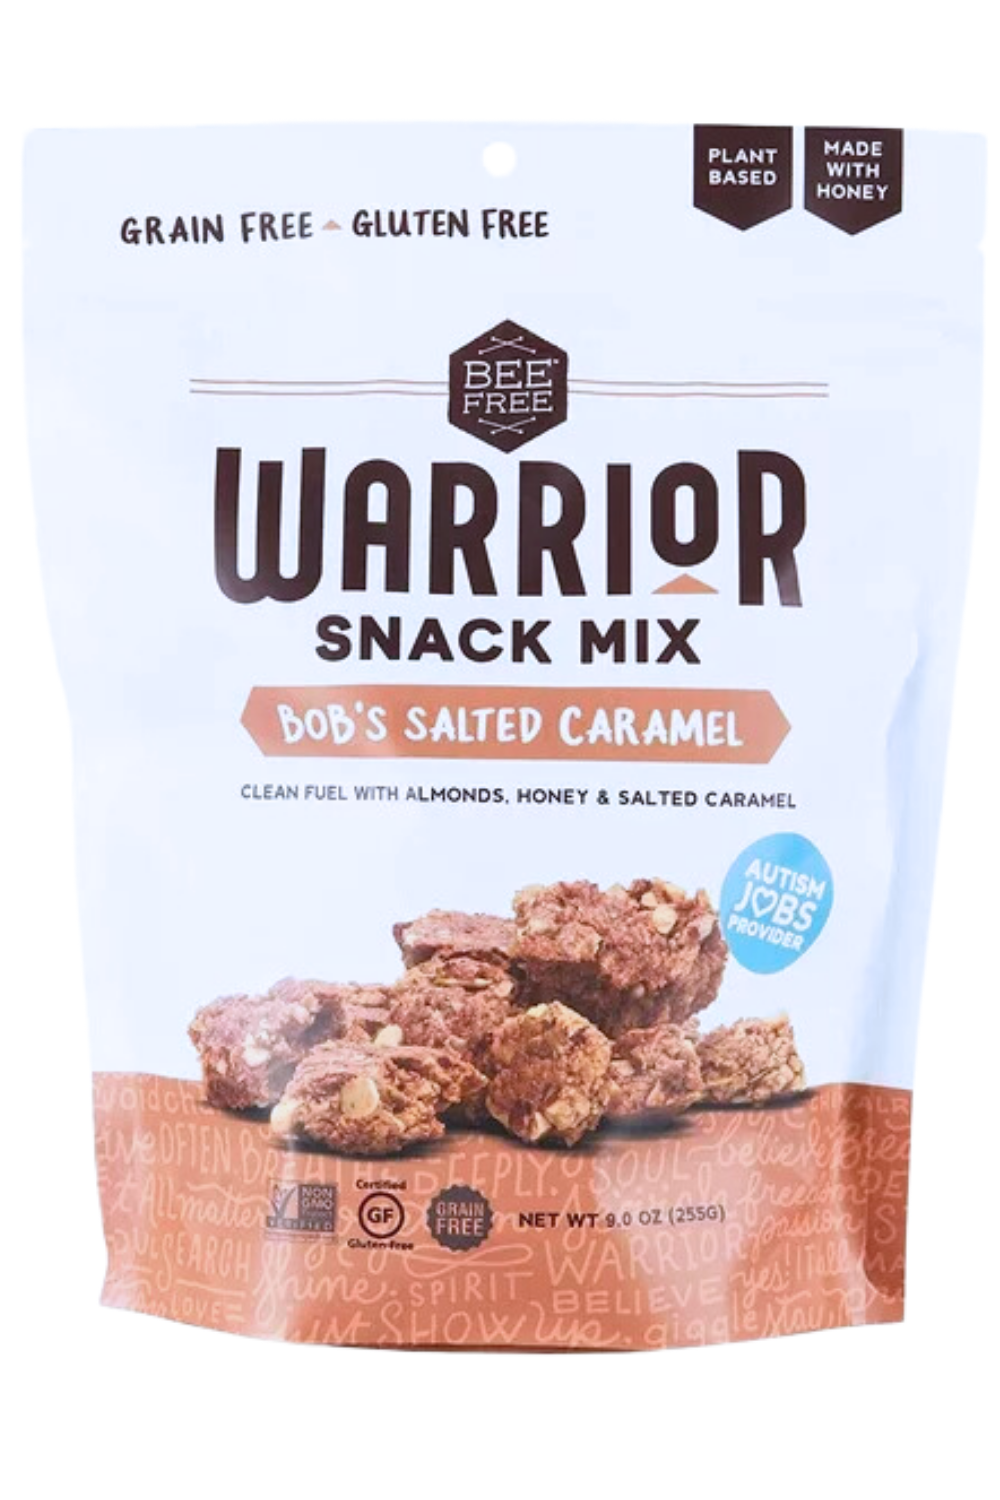 Warrior Snack Mix- "Bob's Salted Caramel" WARRIOR MIX, Salted Caramel Warrior mix by Top Of Island, 9 oz, bag